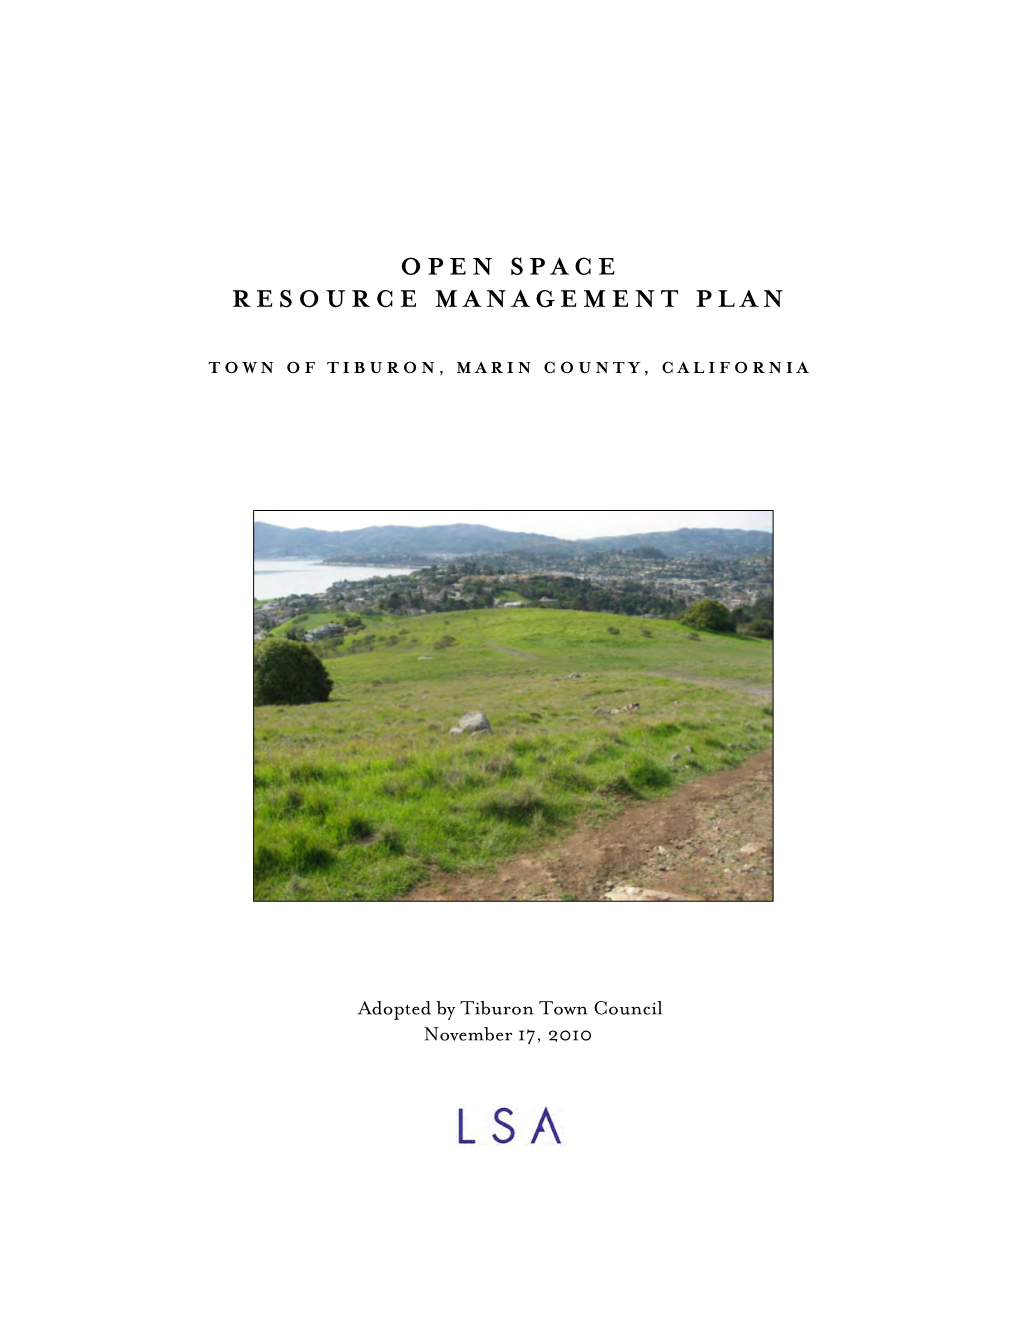 Open Space Resource Management Plan (2010)